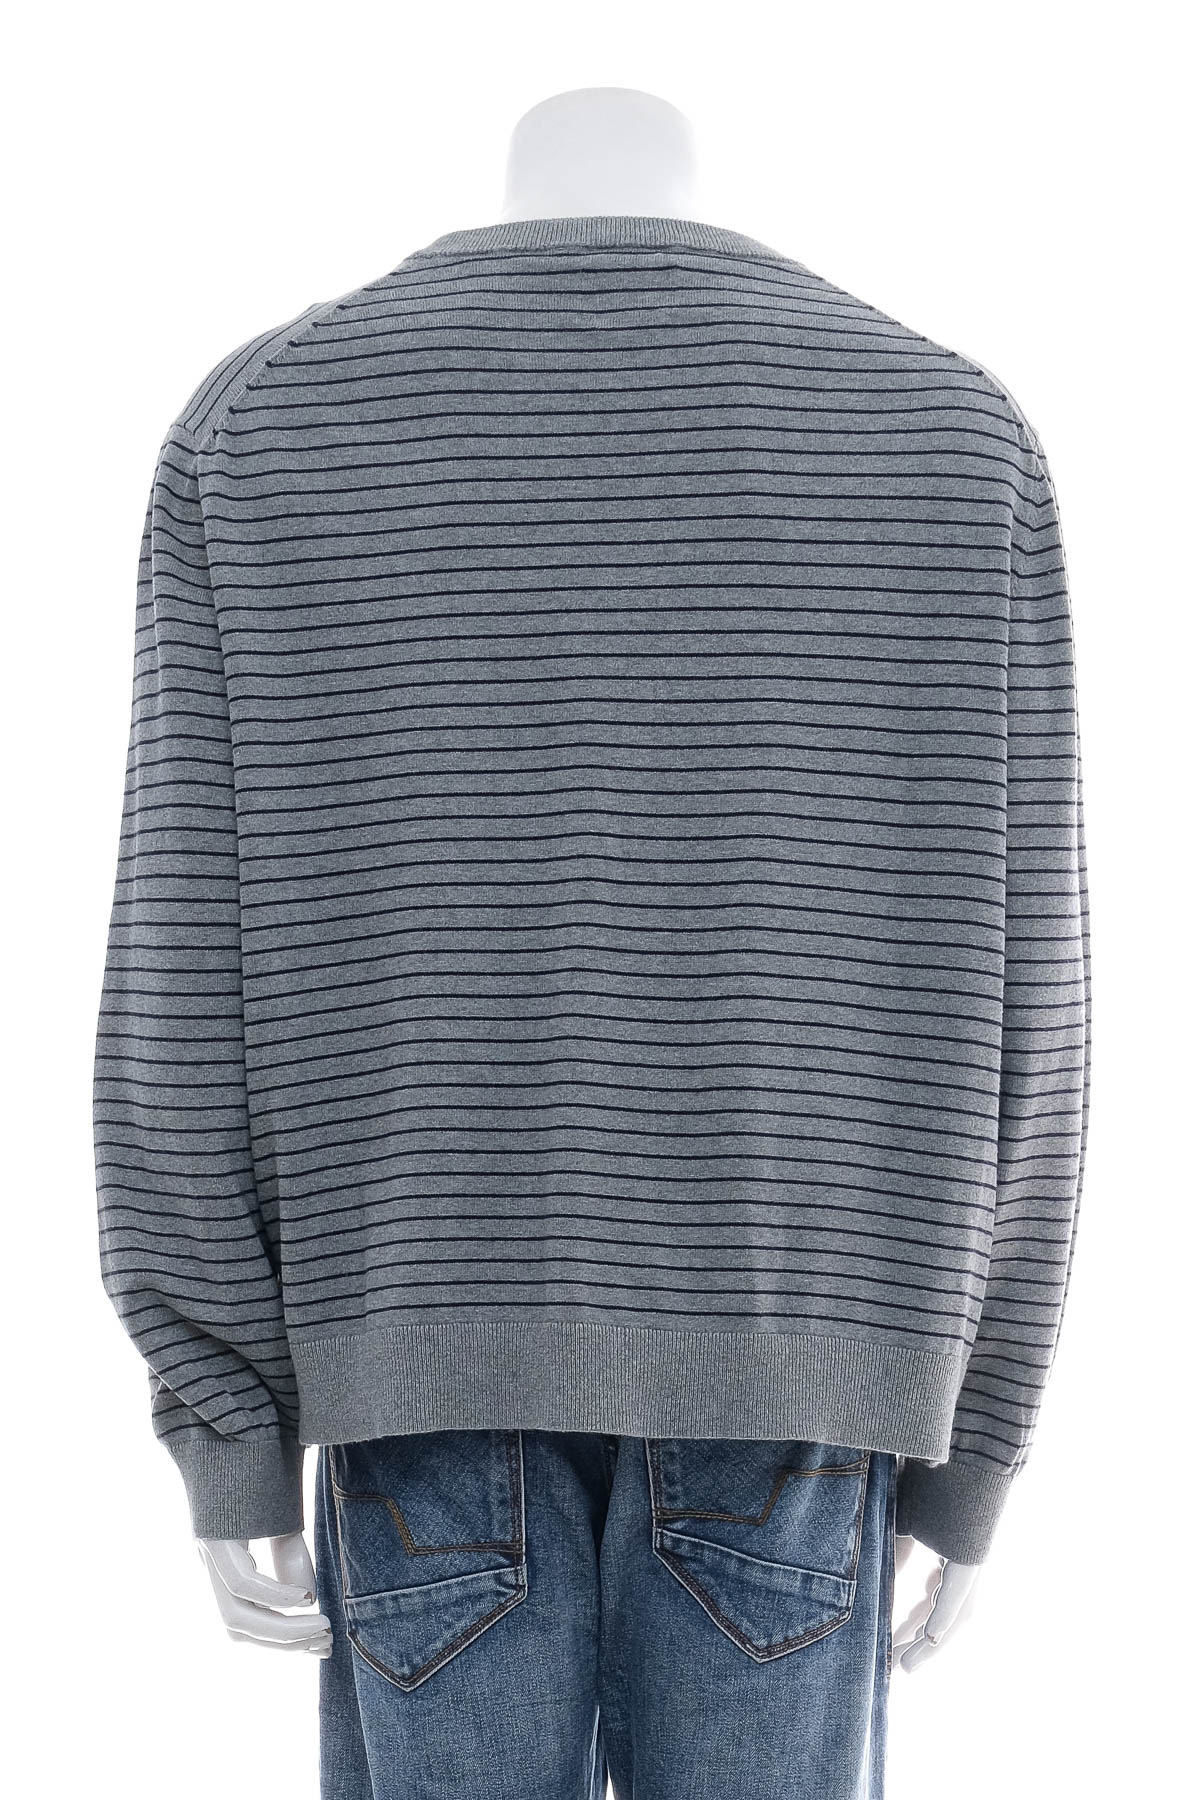 Men's sweater - The Basics x C&A - 1